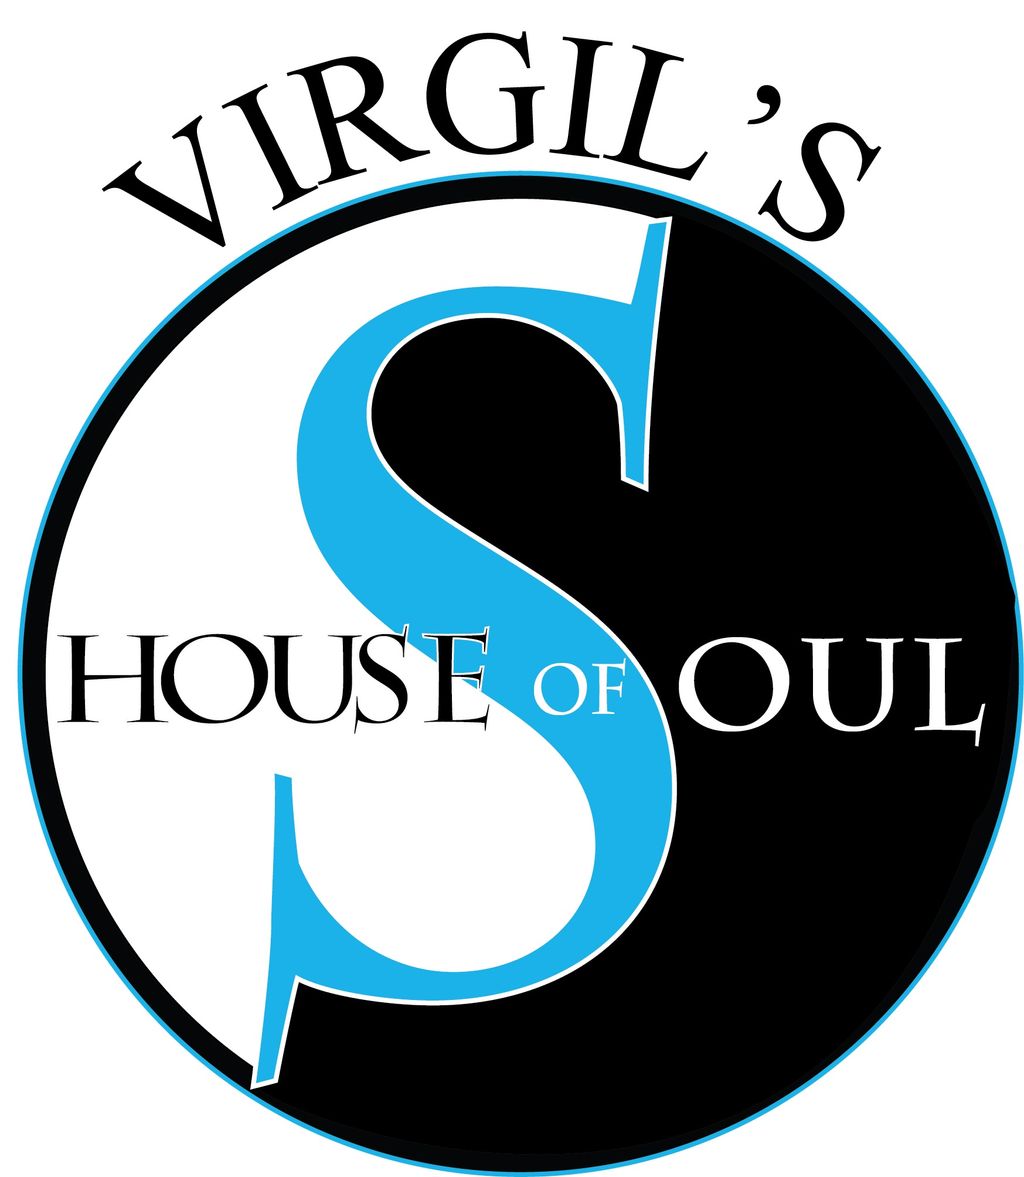 Virgils House of Soul